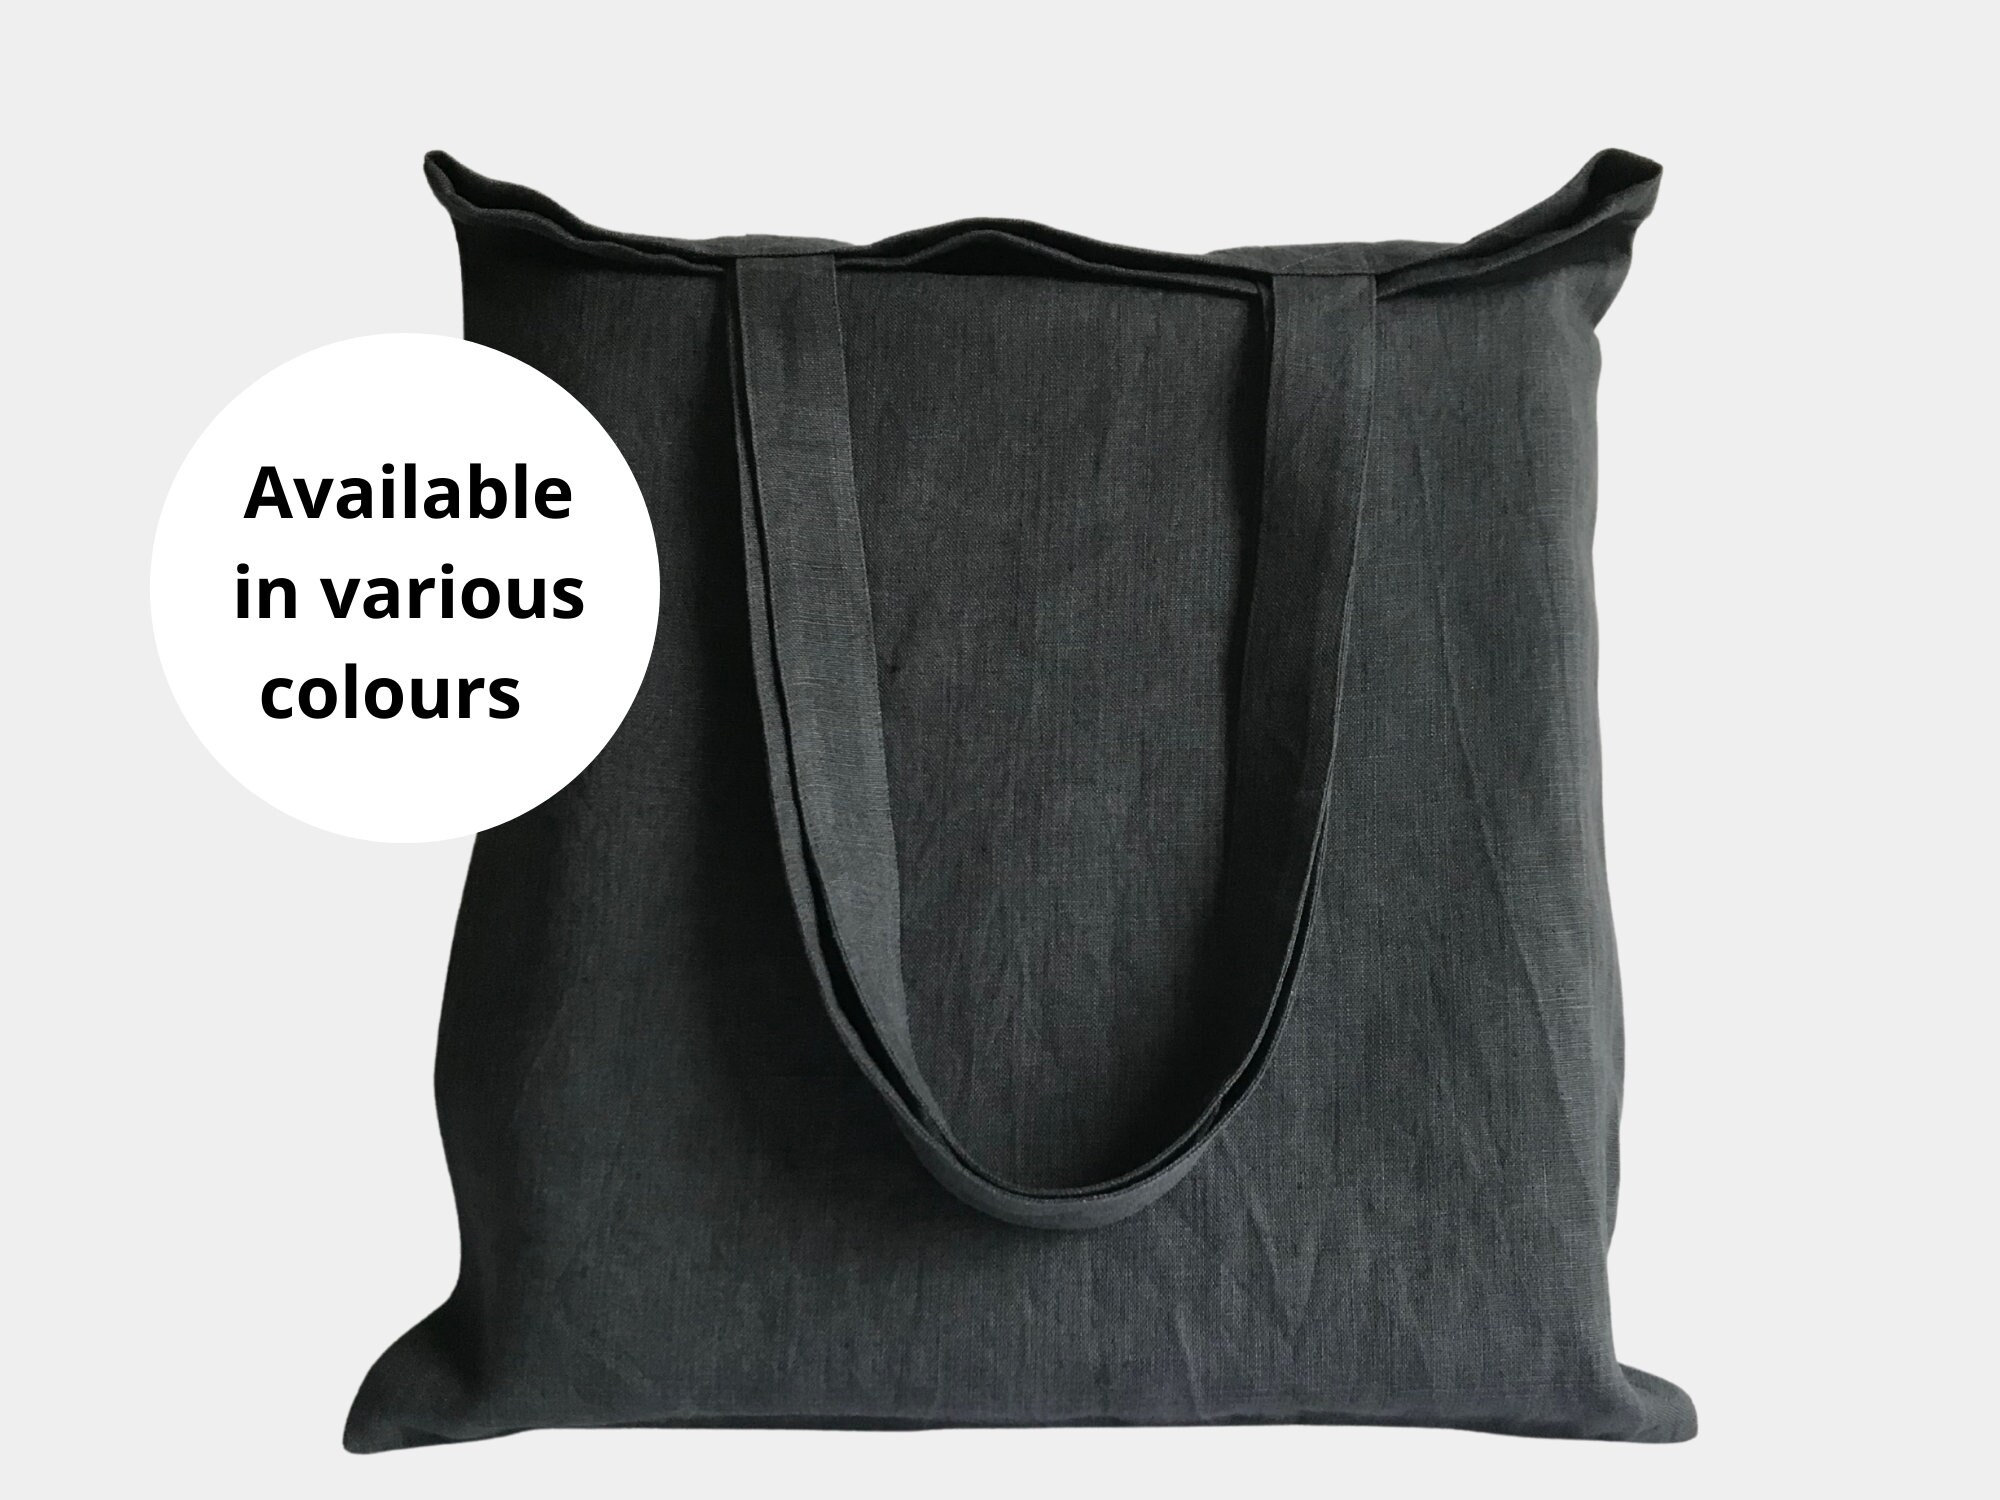 Black Tote Bag Shoulder Bag Large Back to School Computer Bag Minimalist Beige Black Durable Quality Basic Simple Plain Gift Present Women